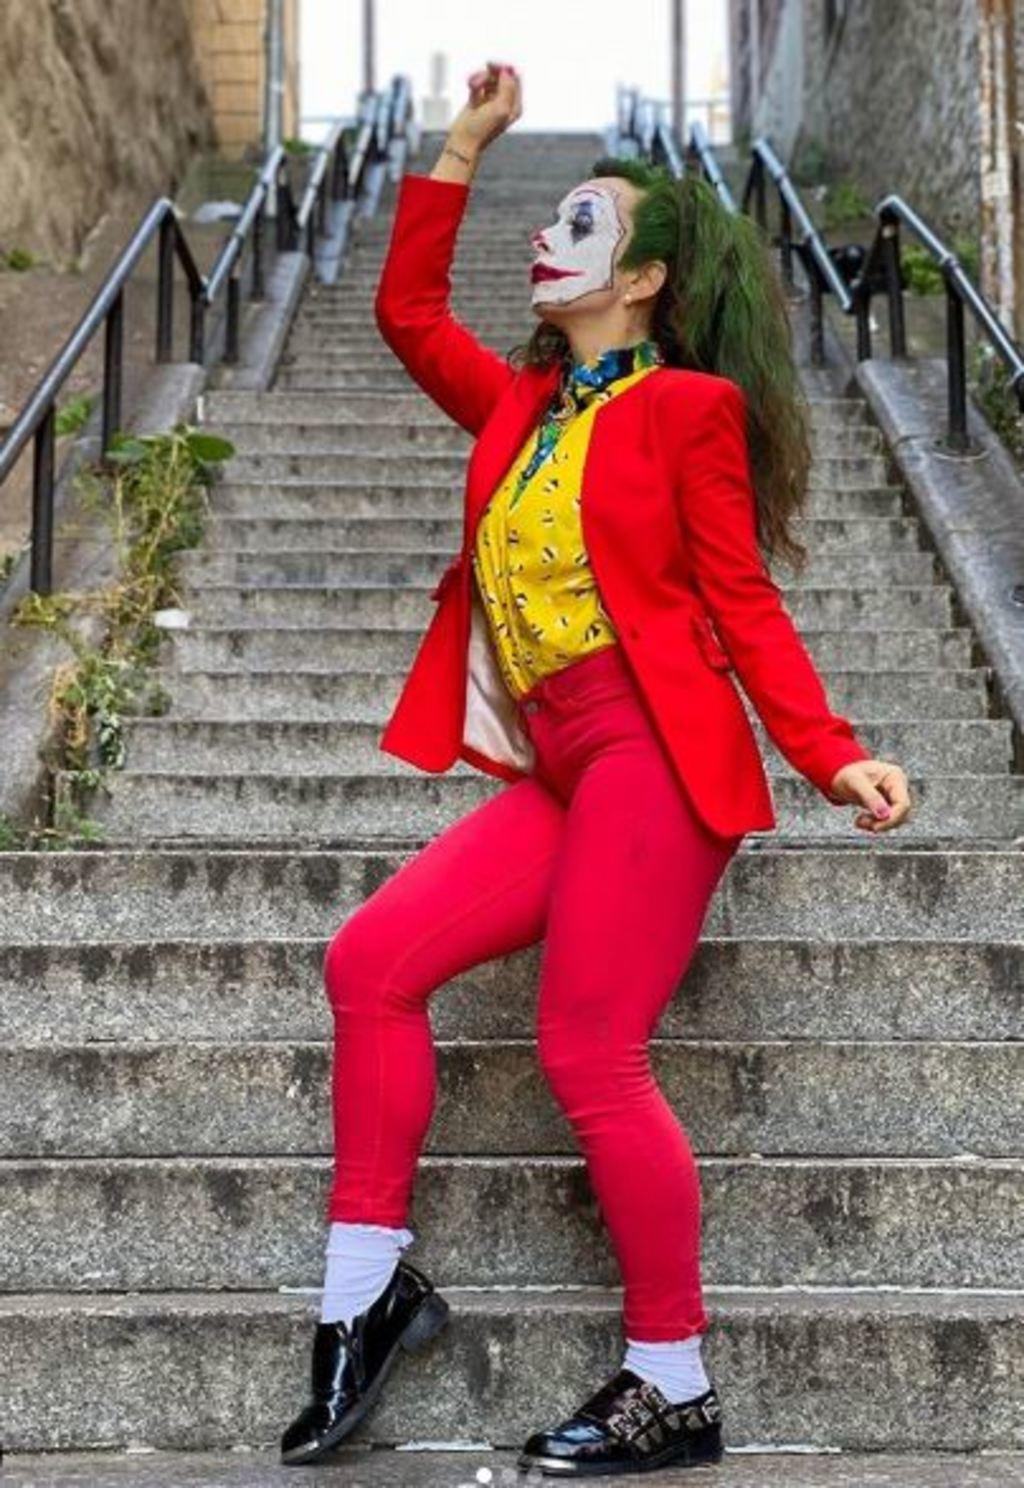 Vecinos del Bronx odian al Joker